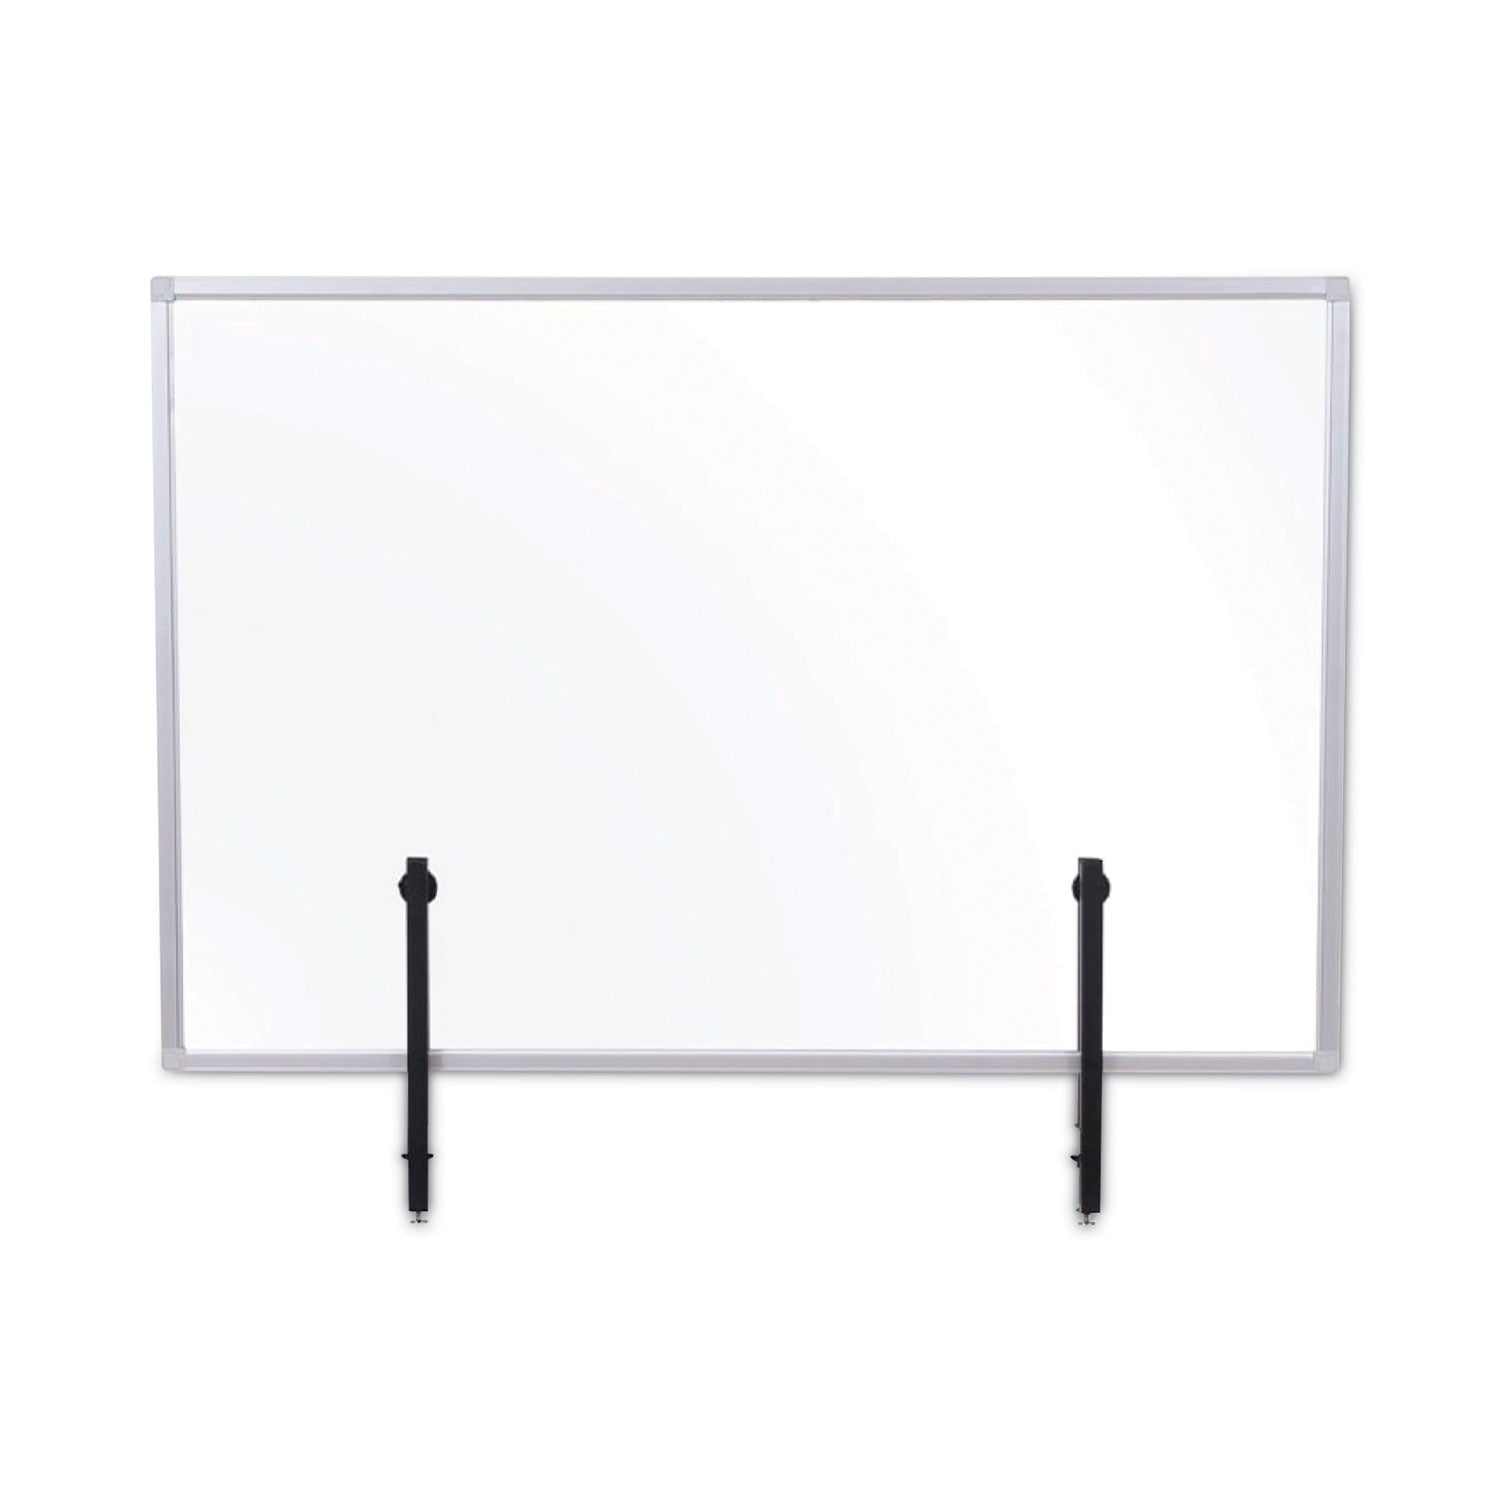 protector-series-glass-aluminum-desktop-divider-472-x-016-x-354-clear_bvcgl08019101 - 1